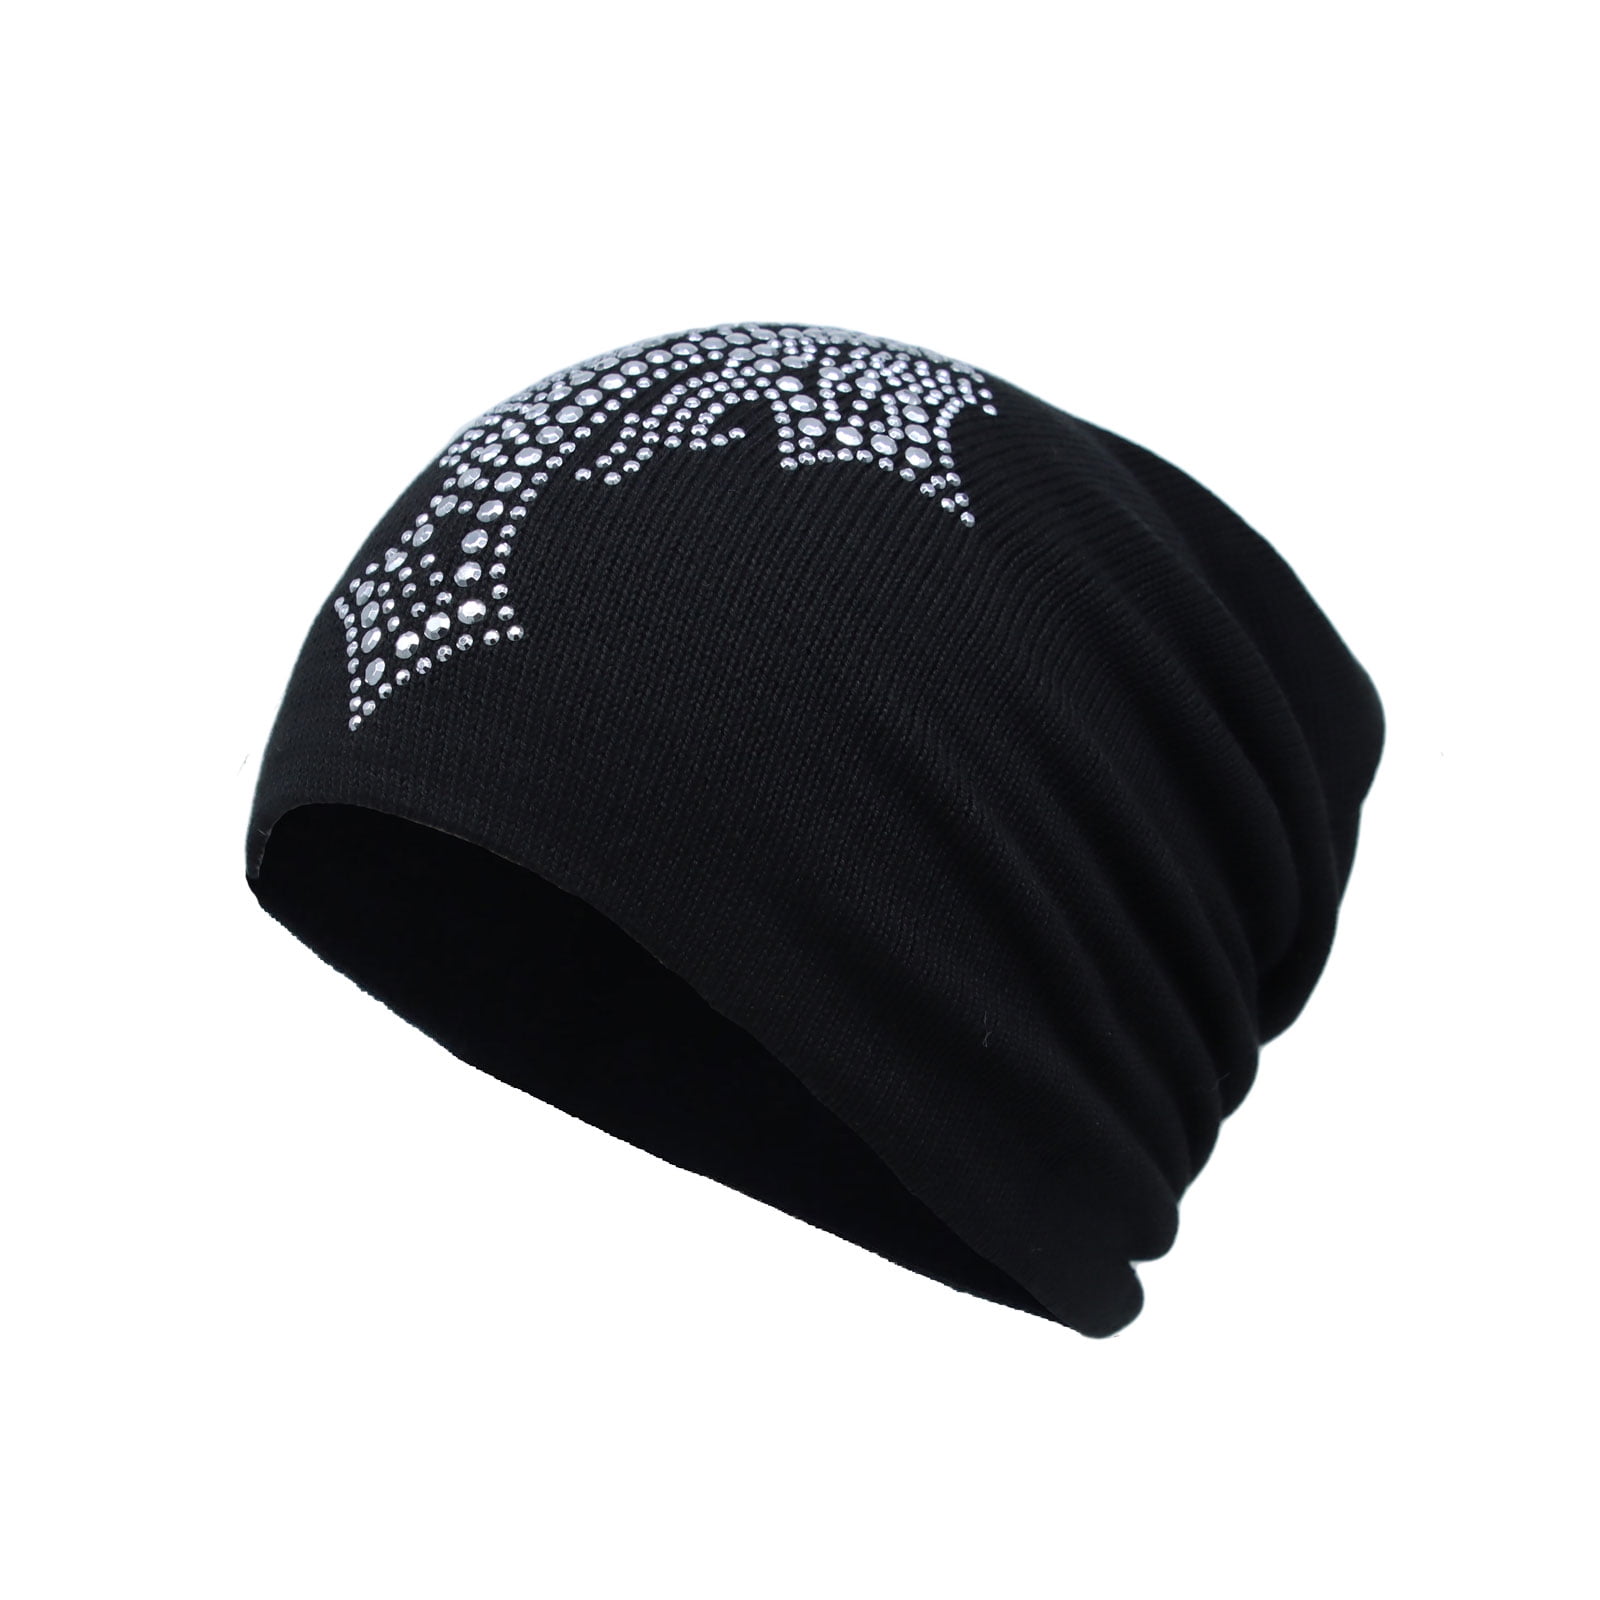 WITHMOONS Cross Rhinestone Knitted Beanie Hat Cotton Skull Cap YT51354  (Black)